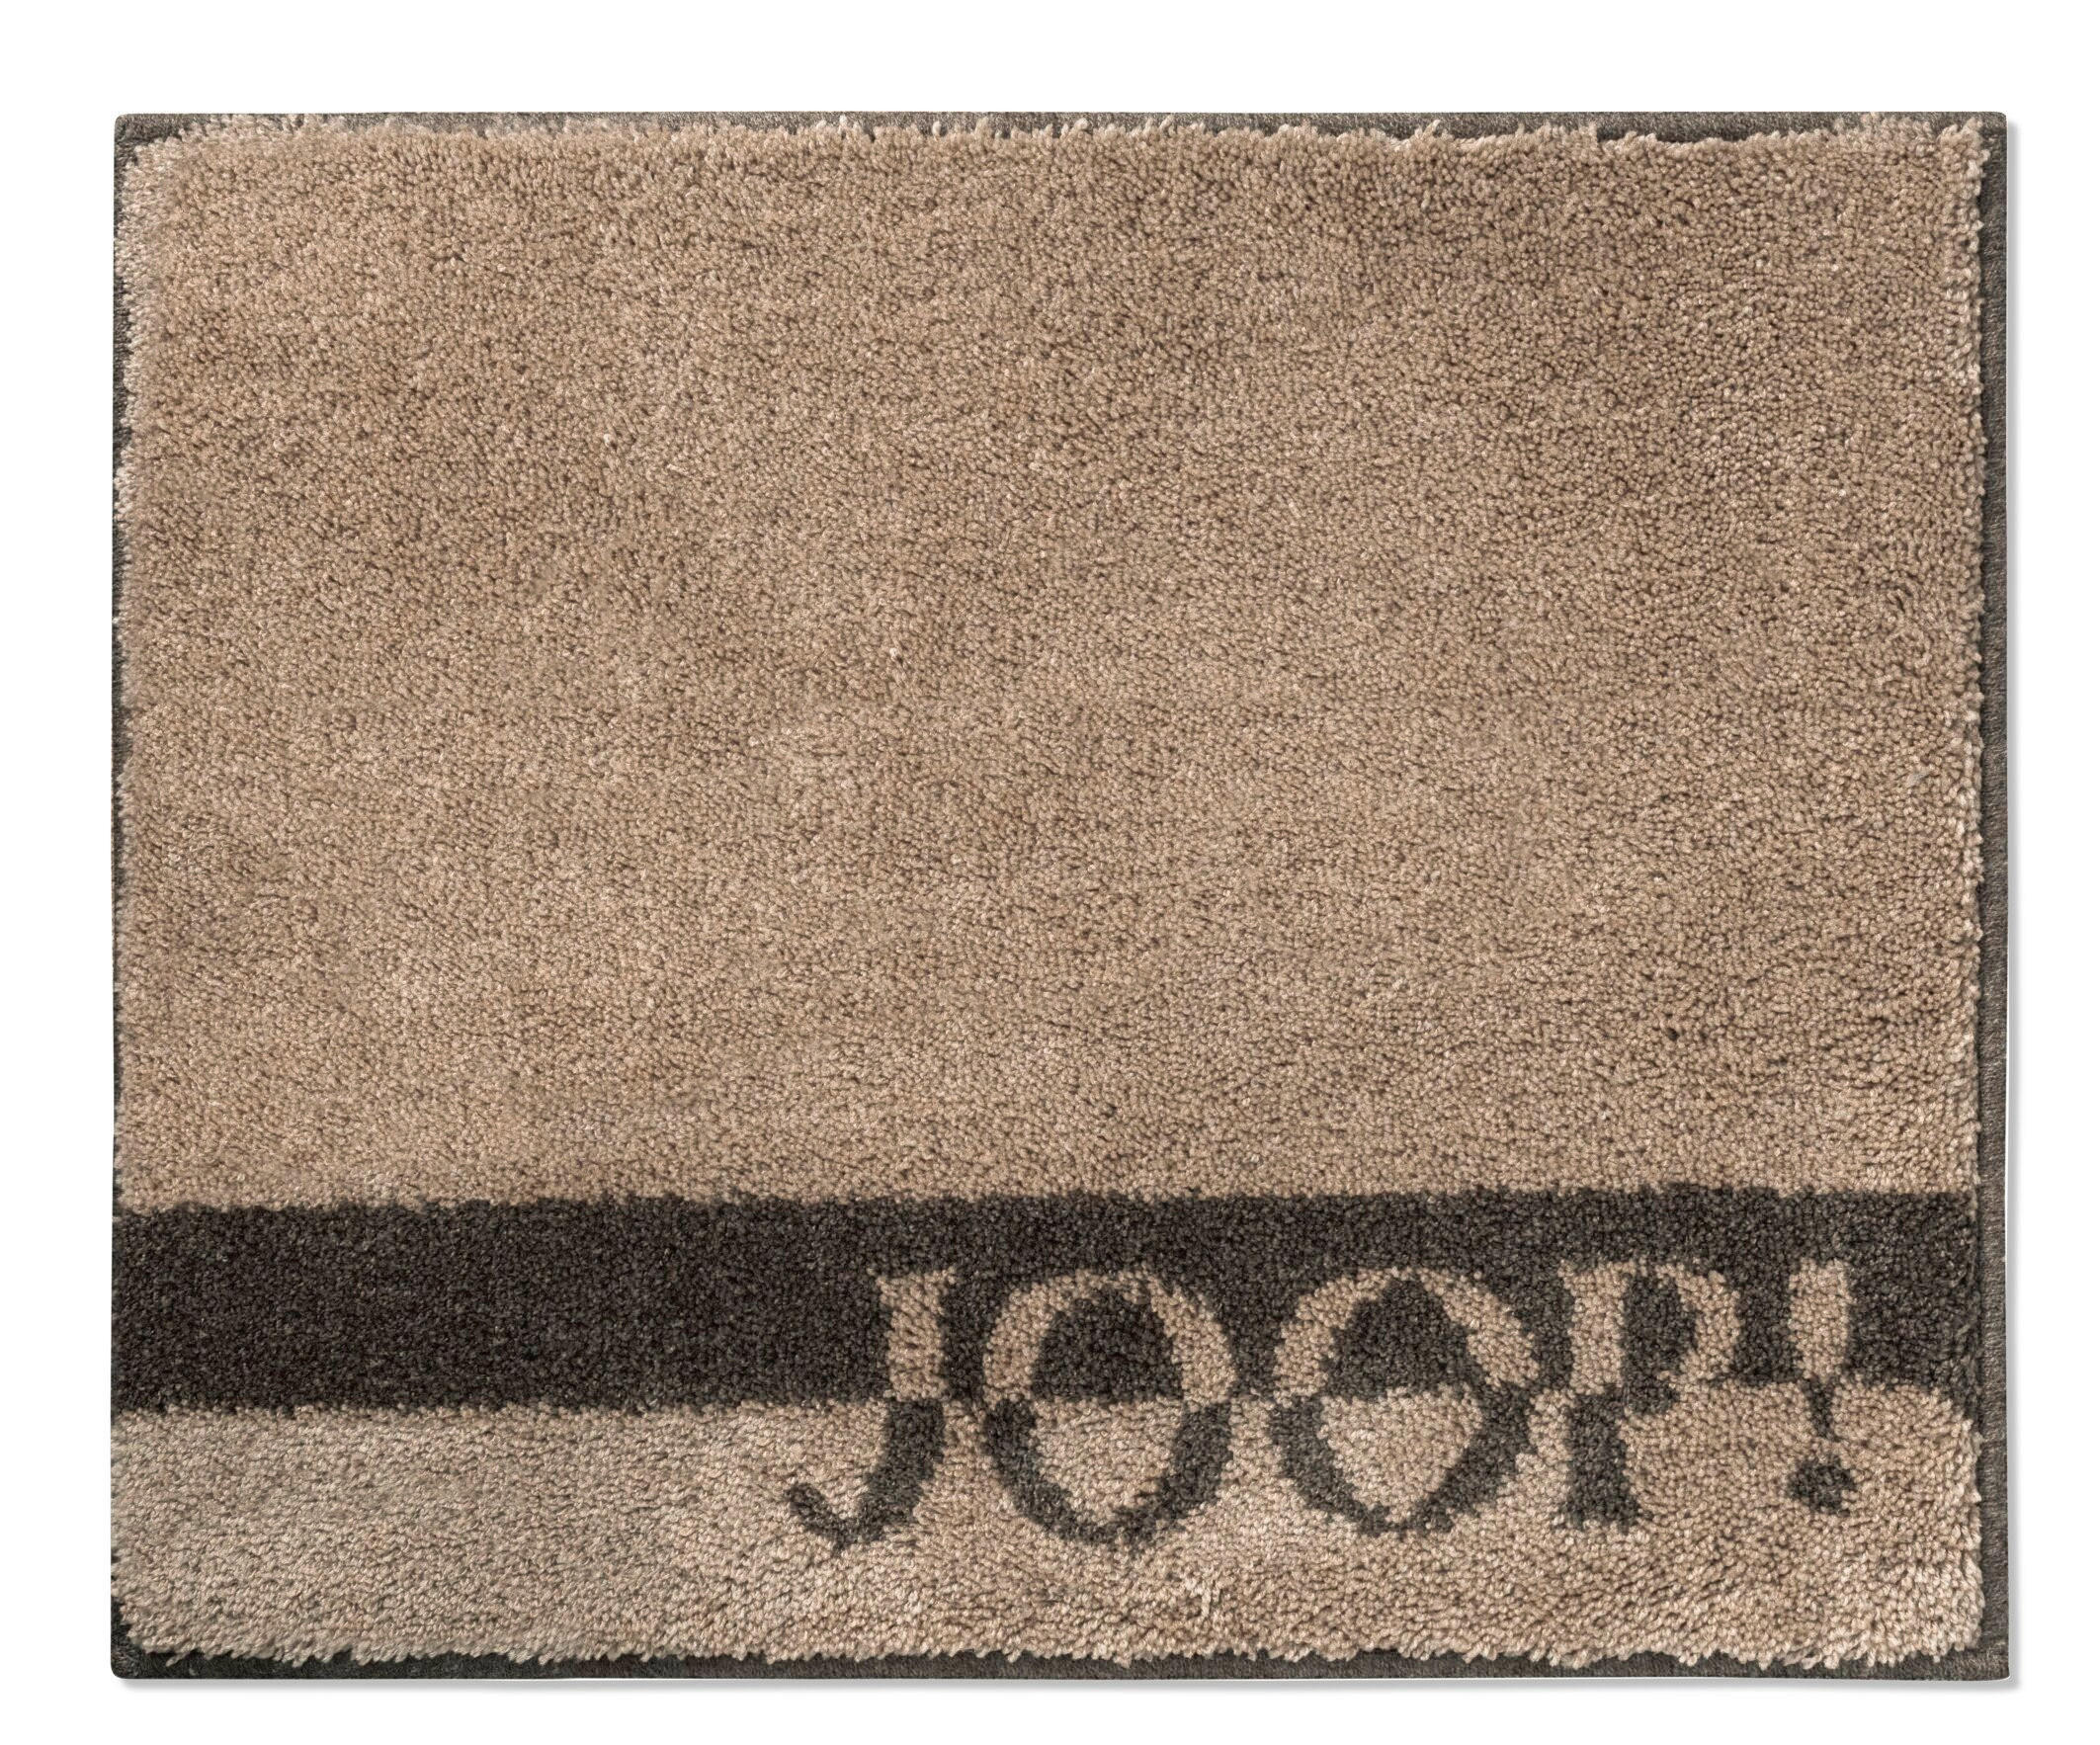 BADTEPPICH  LOGO STRIPES 50/60 cm  - Sandfarben, Basics, Textil (50/60cm) - Joop!